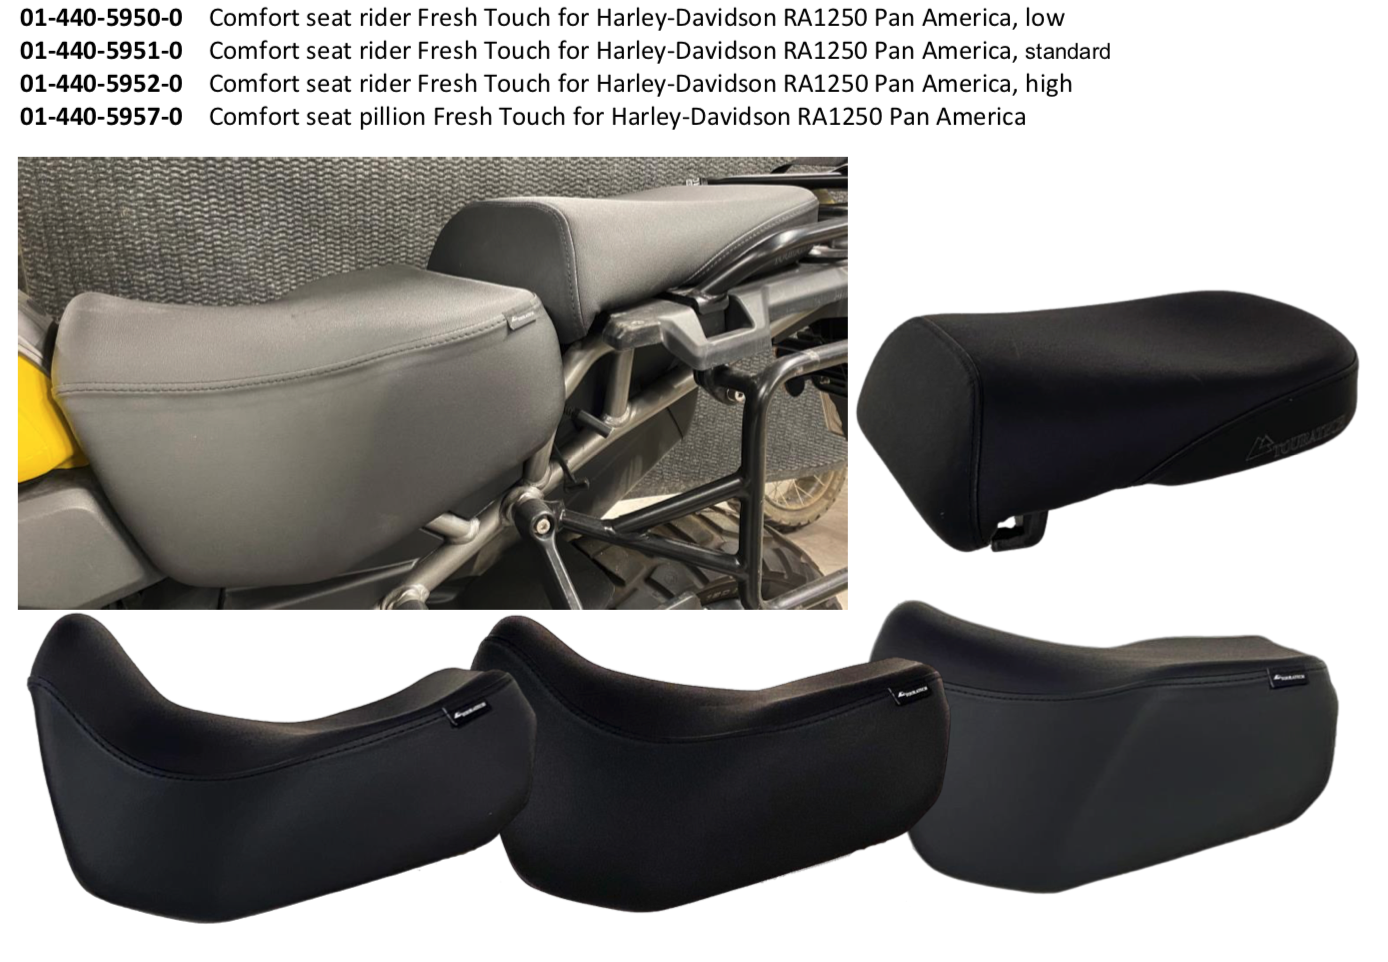 Comfort seat rider Fresh Touch Harley-Davidson RA1250 Pan America, low